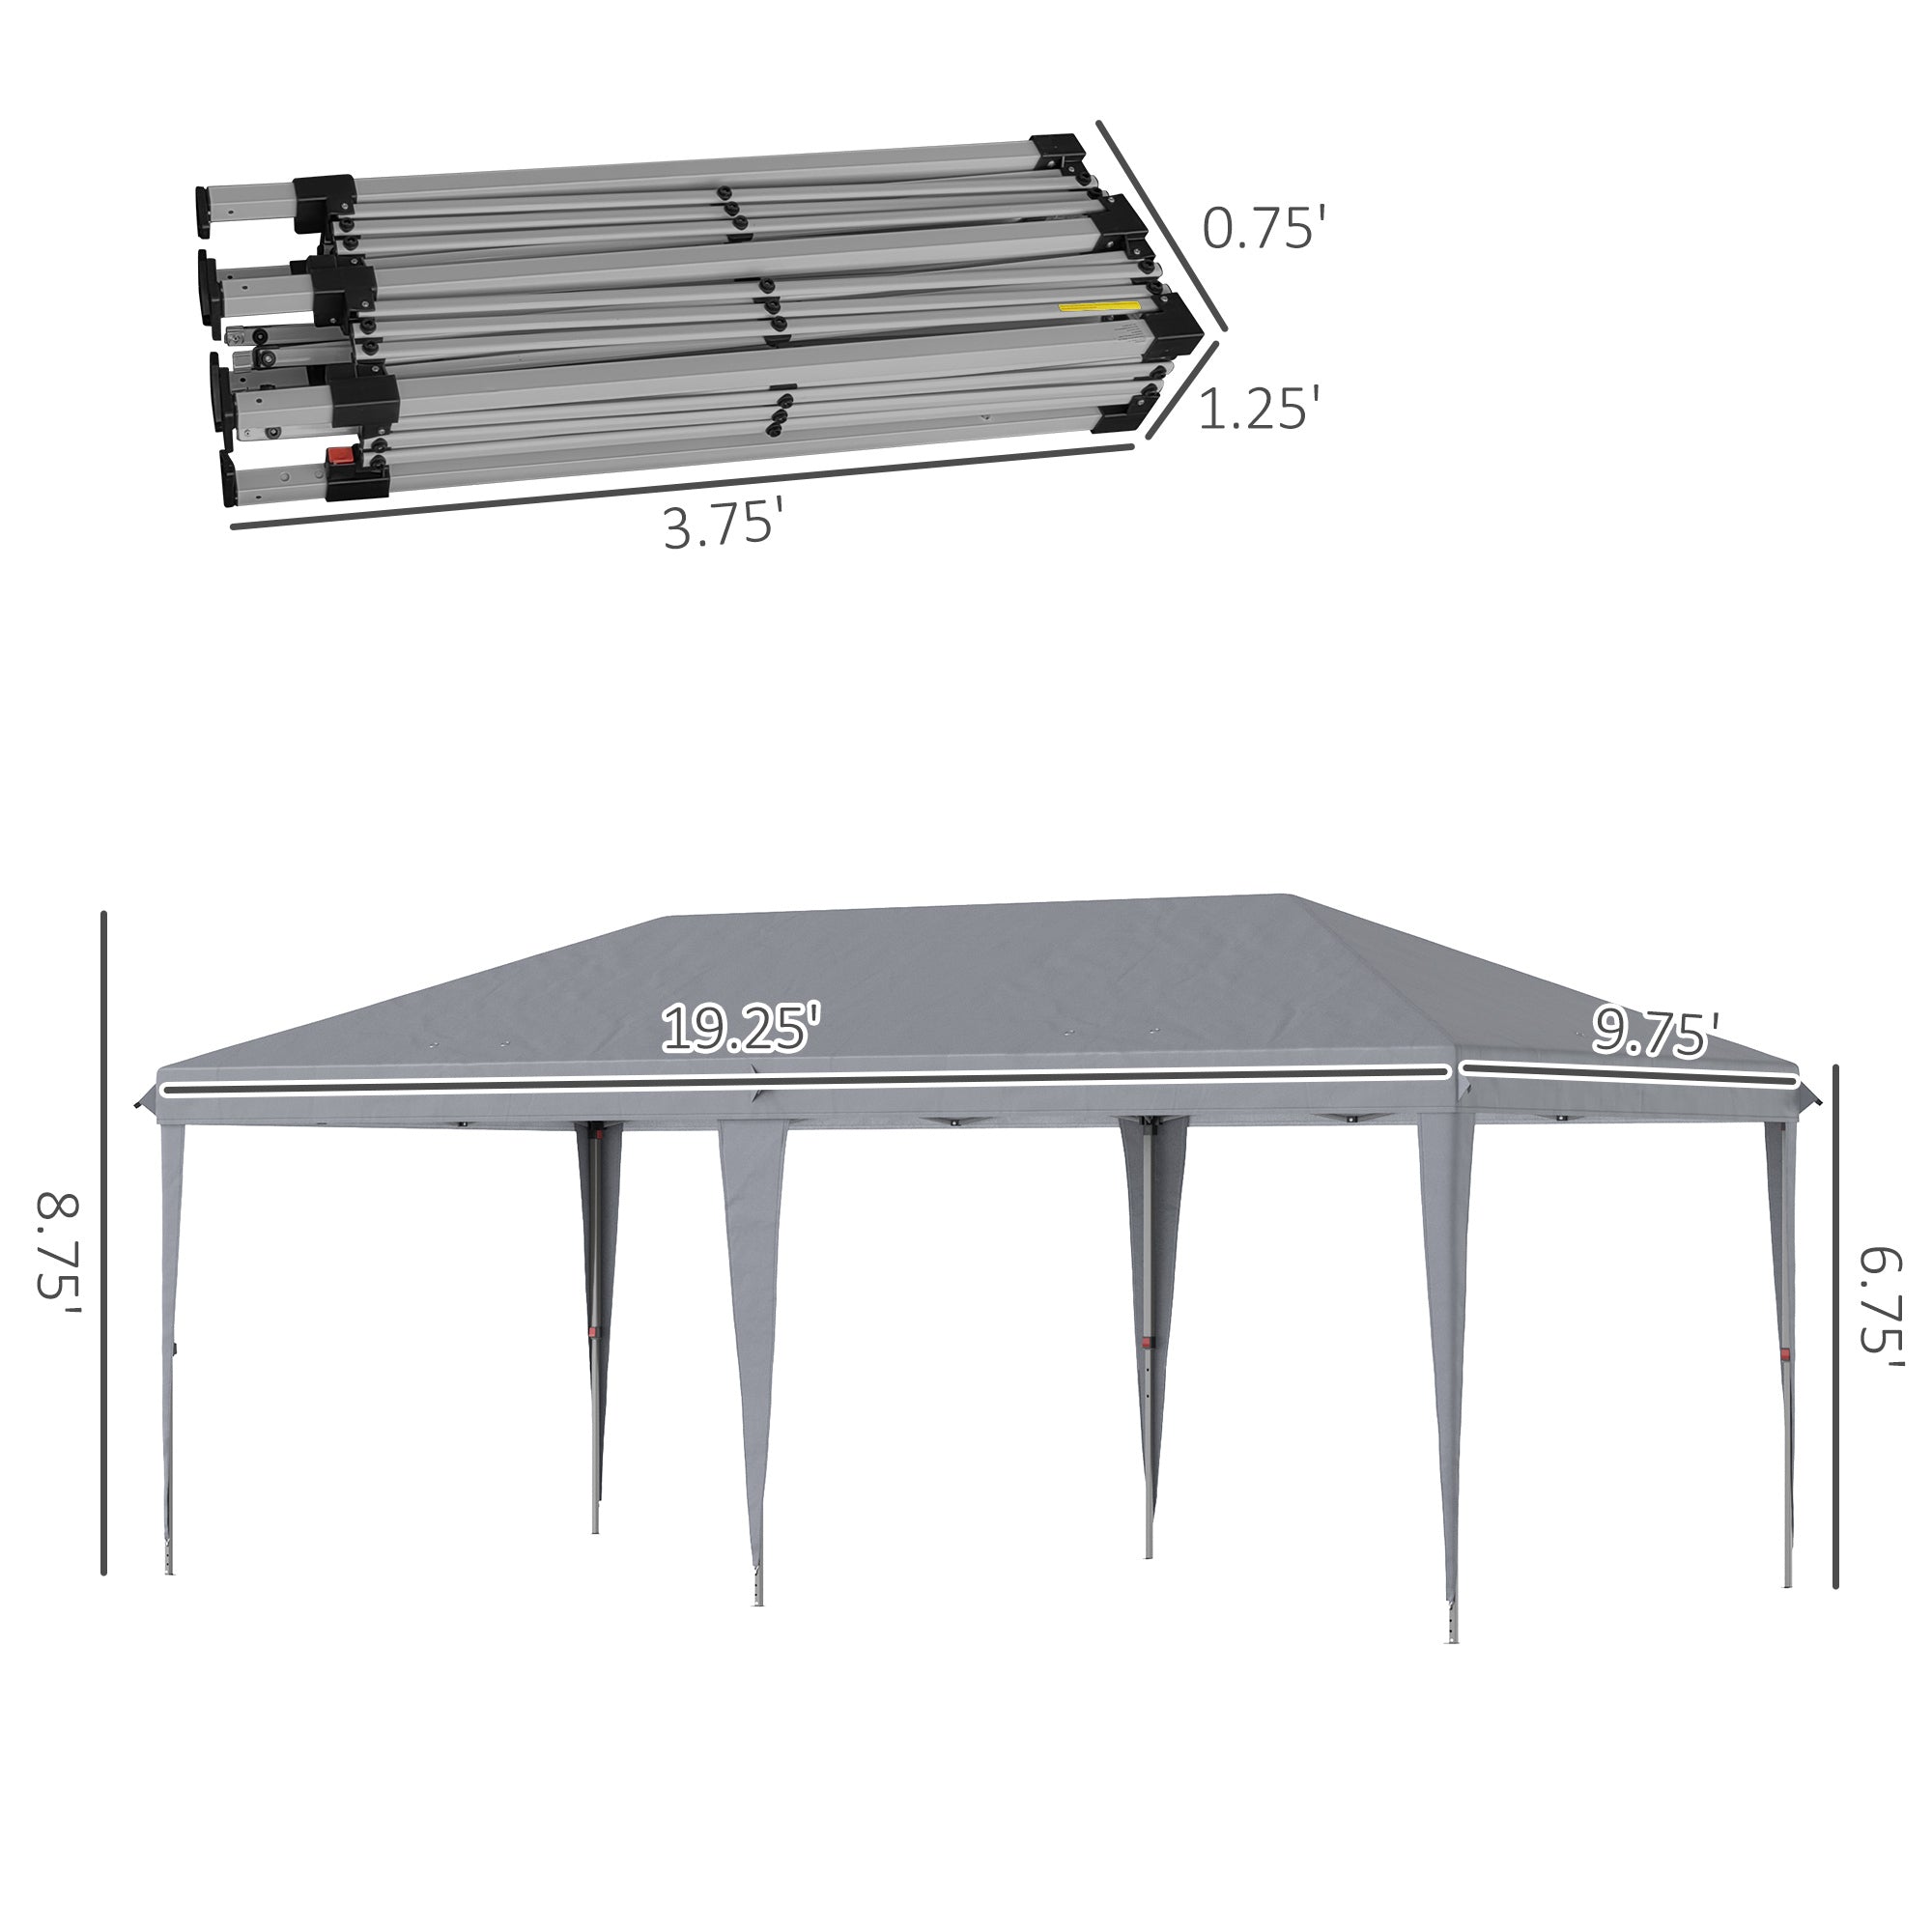 Outsunny 10' x 20' Pop Up Canopy Tent, Heavy Duty gray-steel